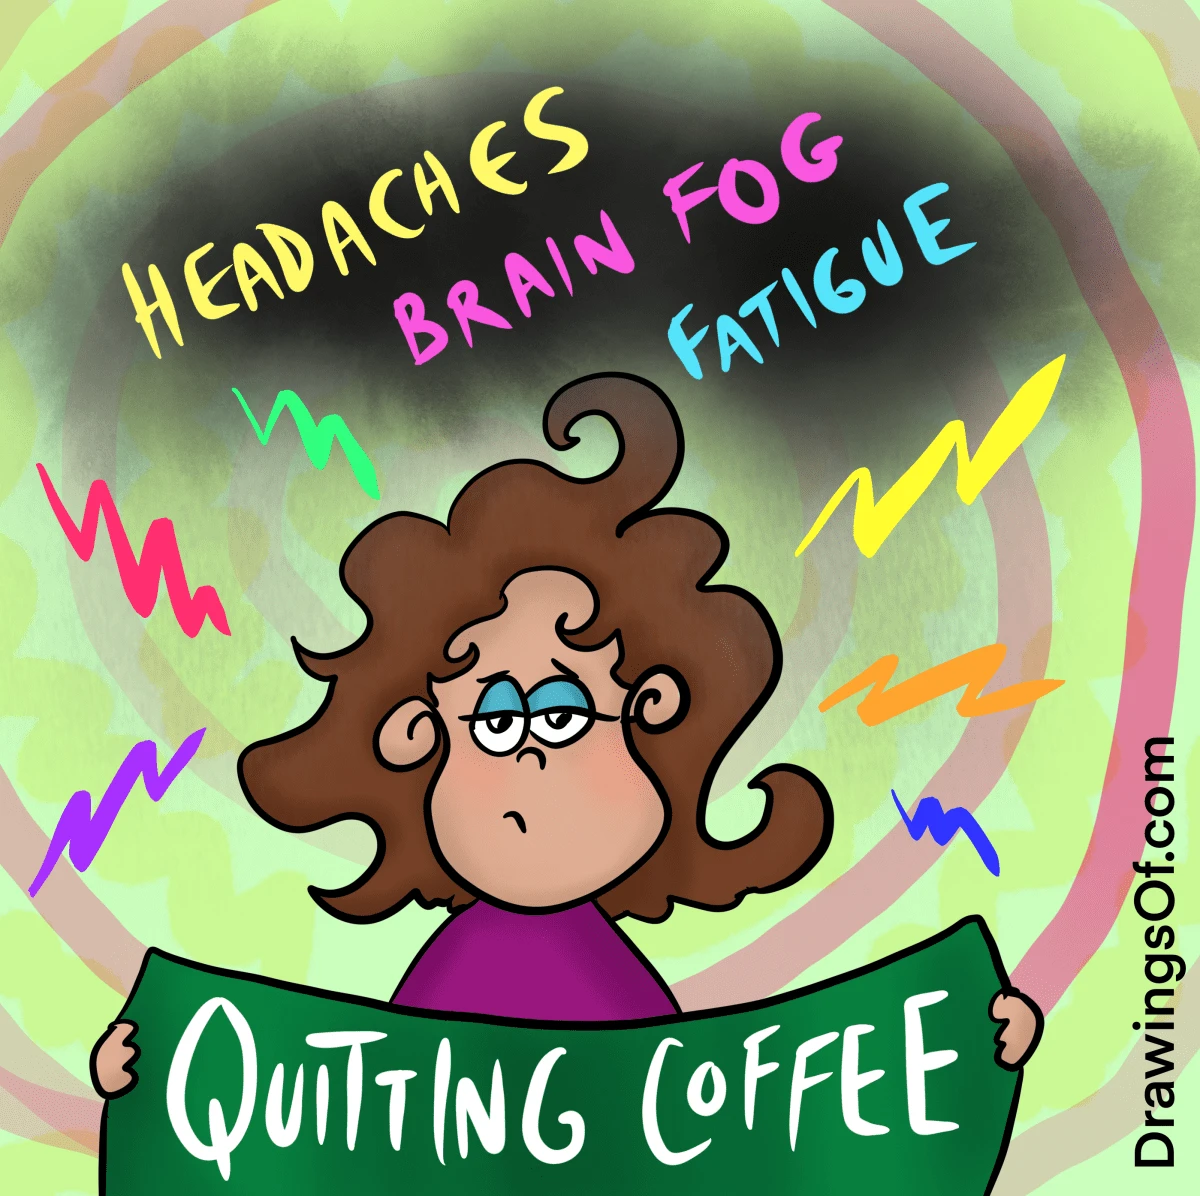 Caffeine withdrawal symptoms